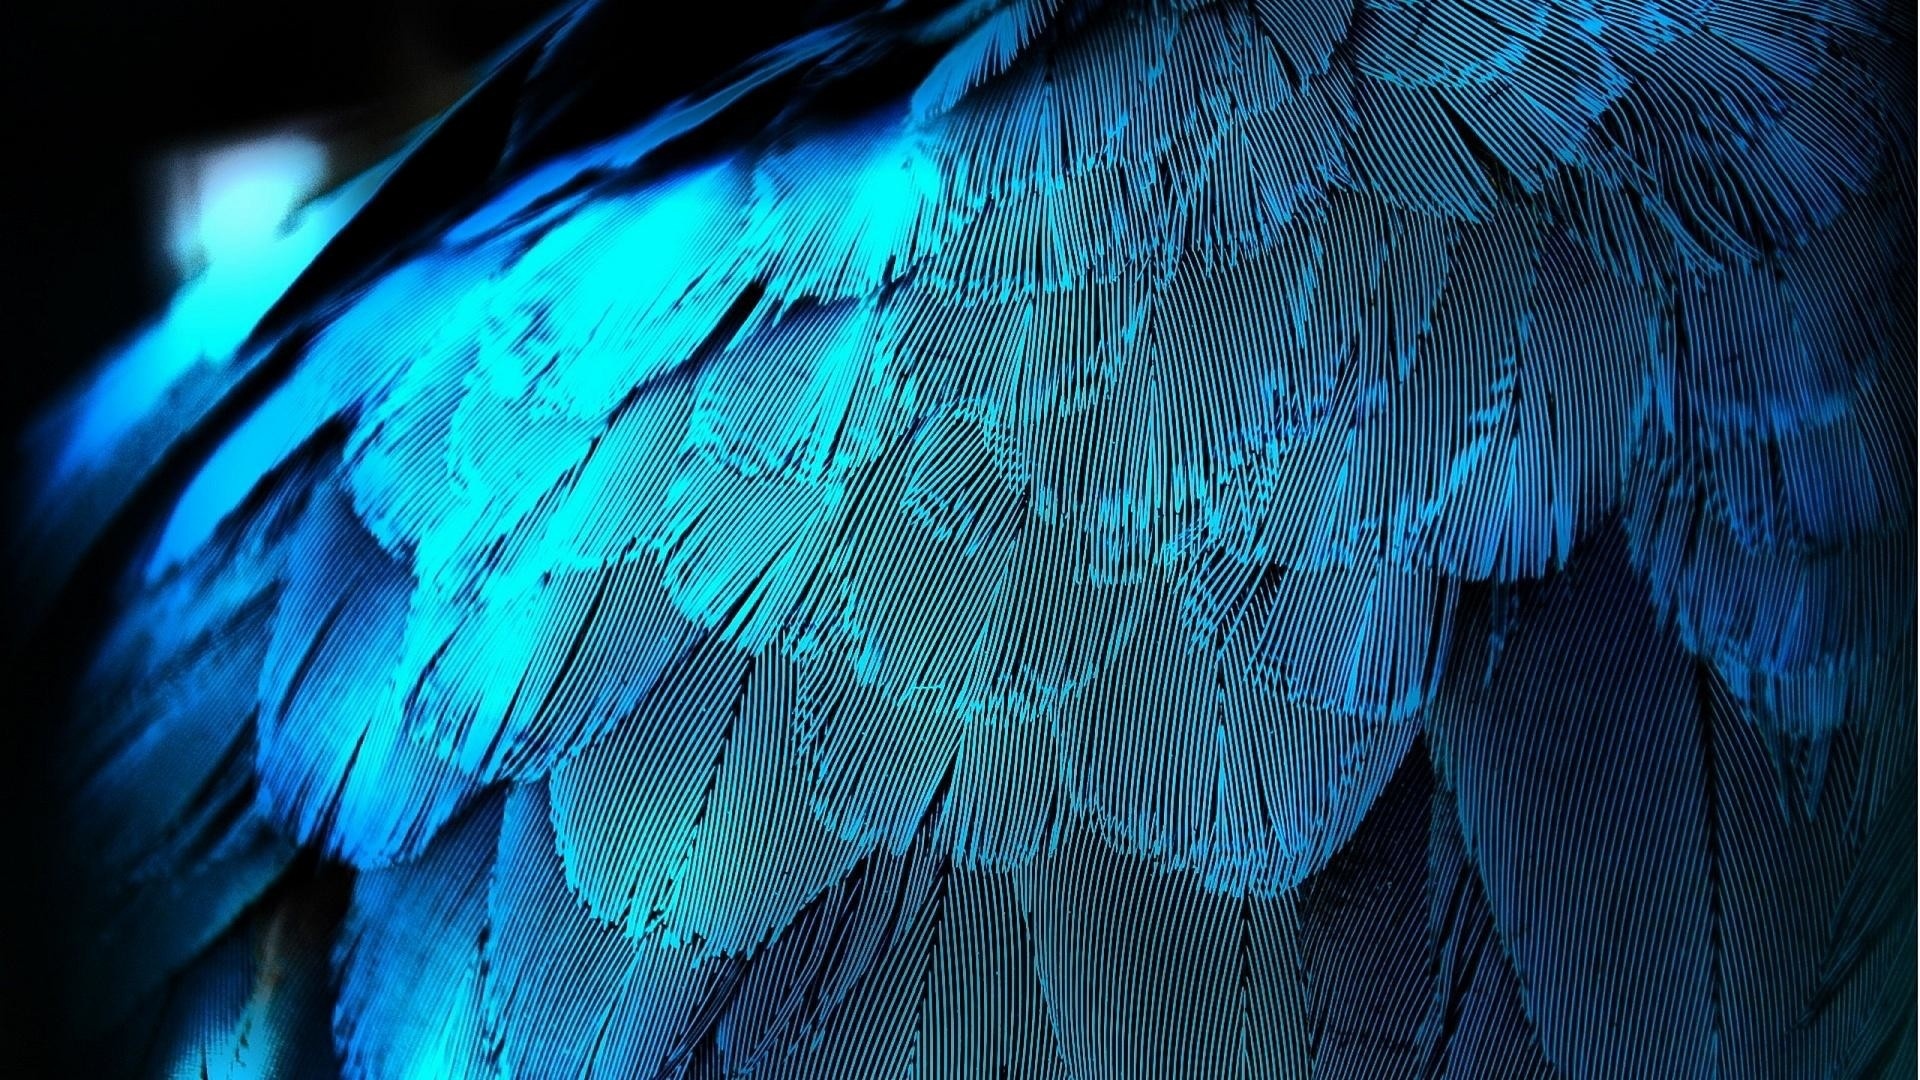 Feathers Image